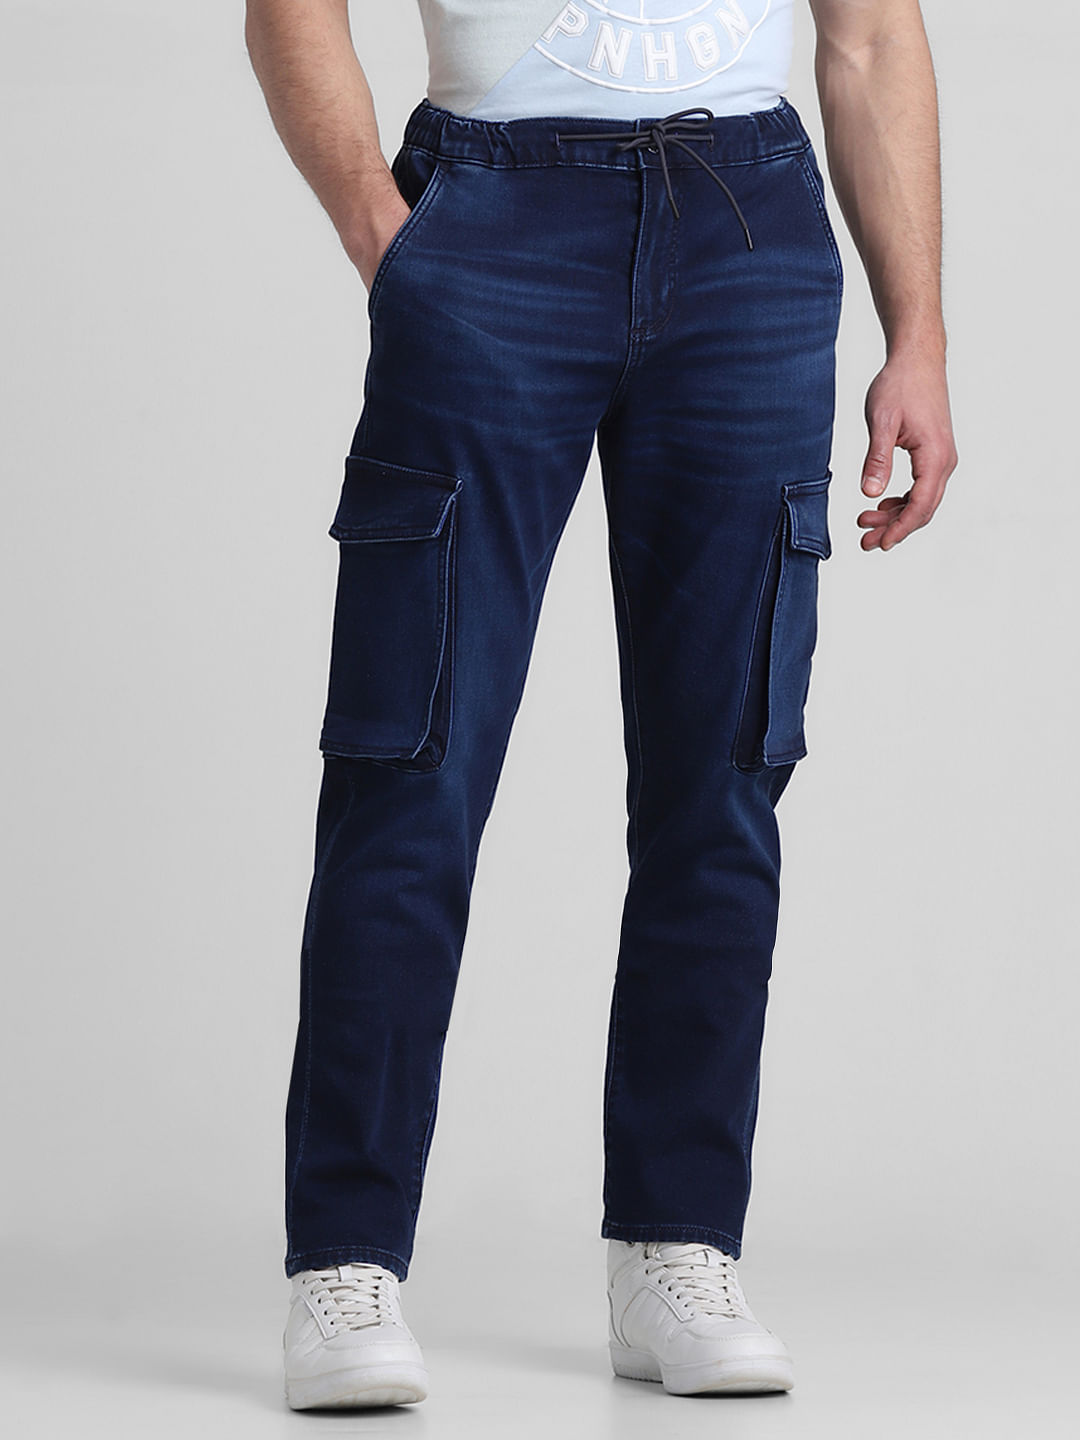 Jeans Trousers Men Winter | High Waist Men's Jeans | Men Winter Jeans Pants  - Jeans Men - Aliexpress